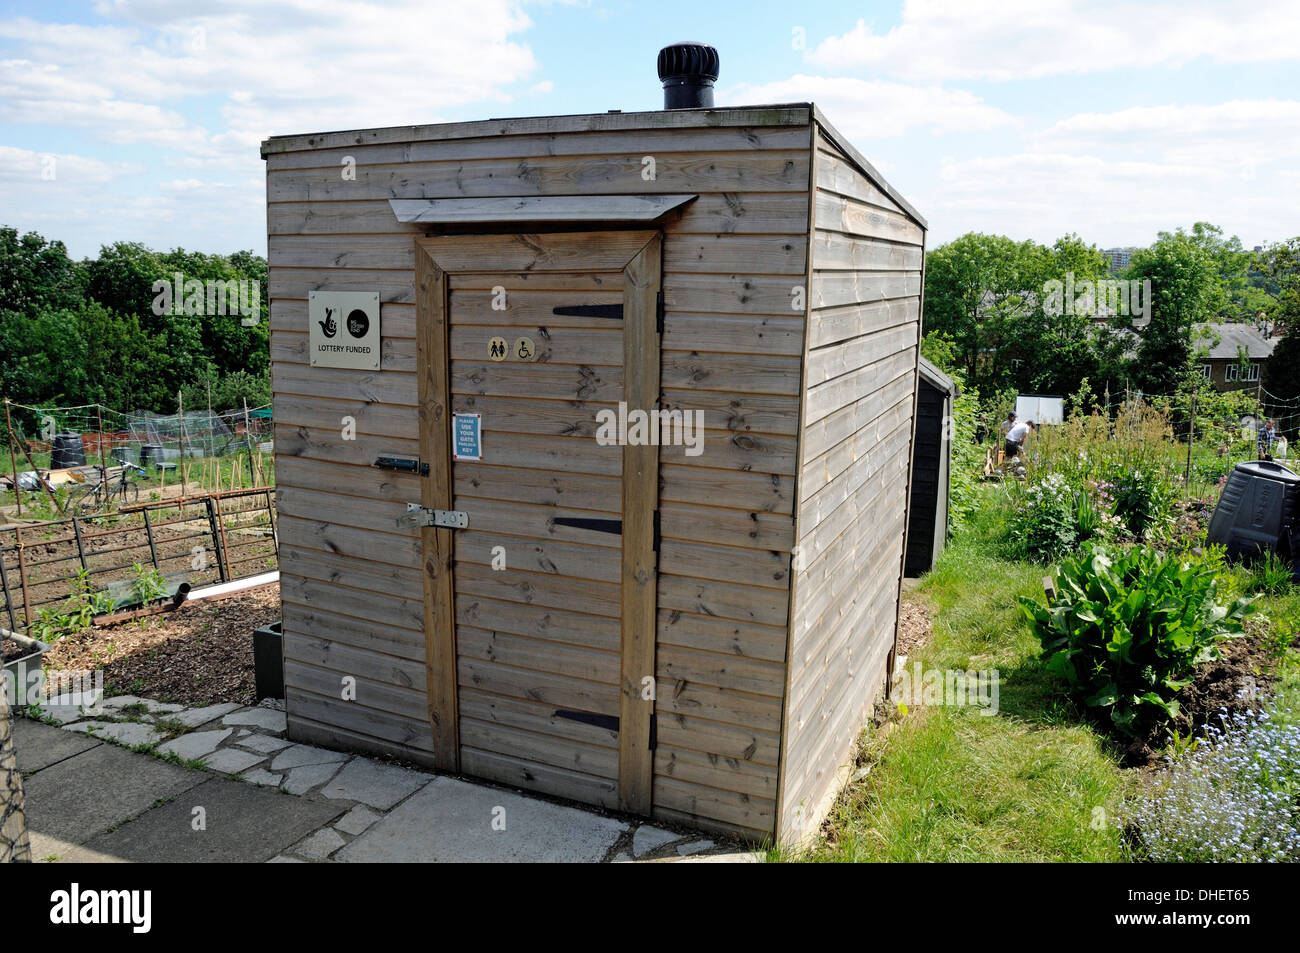 Komposttoilette Alexandra Park Kleingärten London Borough of Haringey England UK Stockfoto